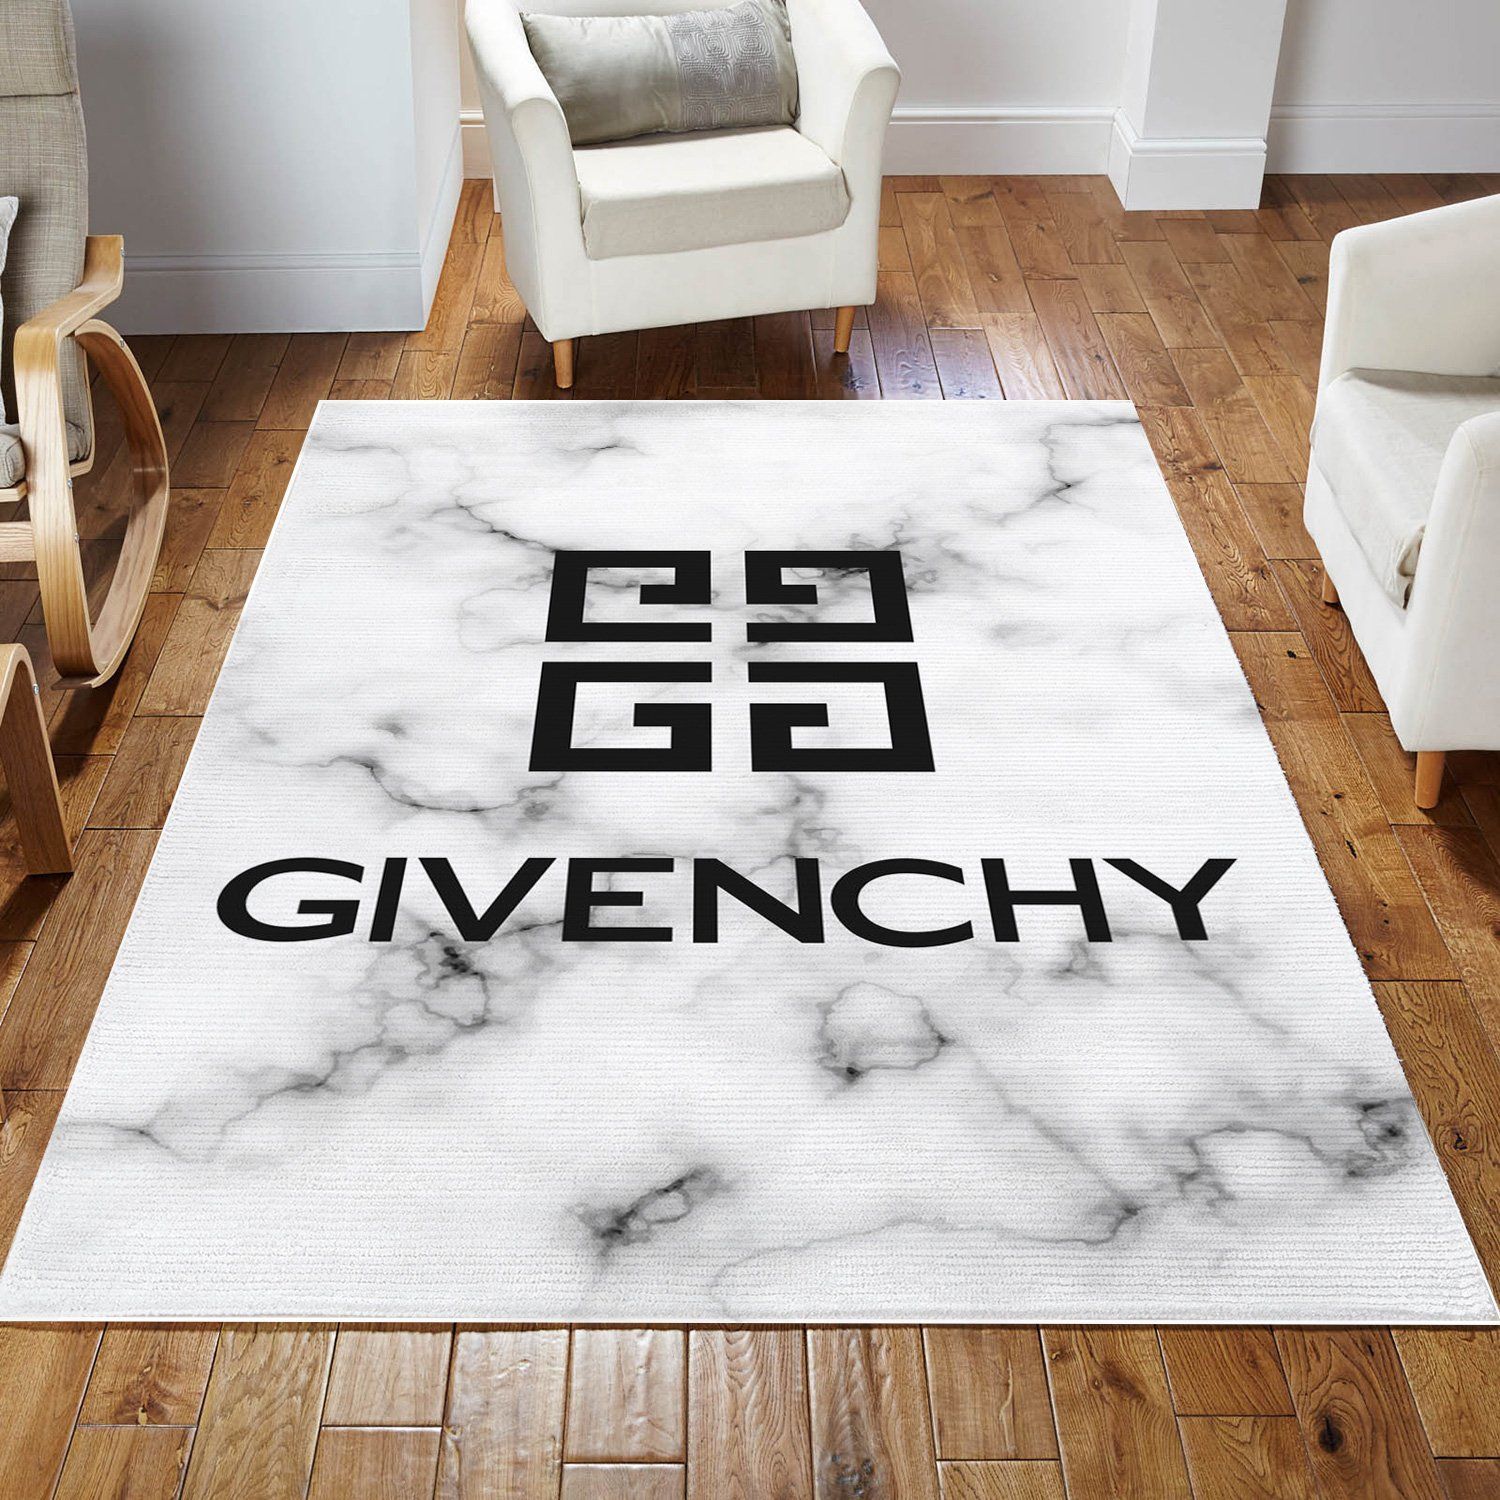 Givenchy Rug Fashion Brand Rug Home Decor Floor Decor - Indoor Outdoor Rugs 3